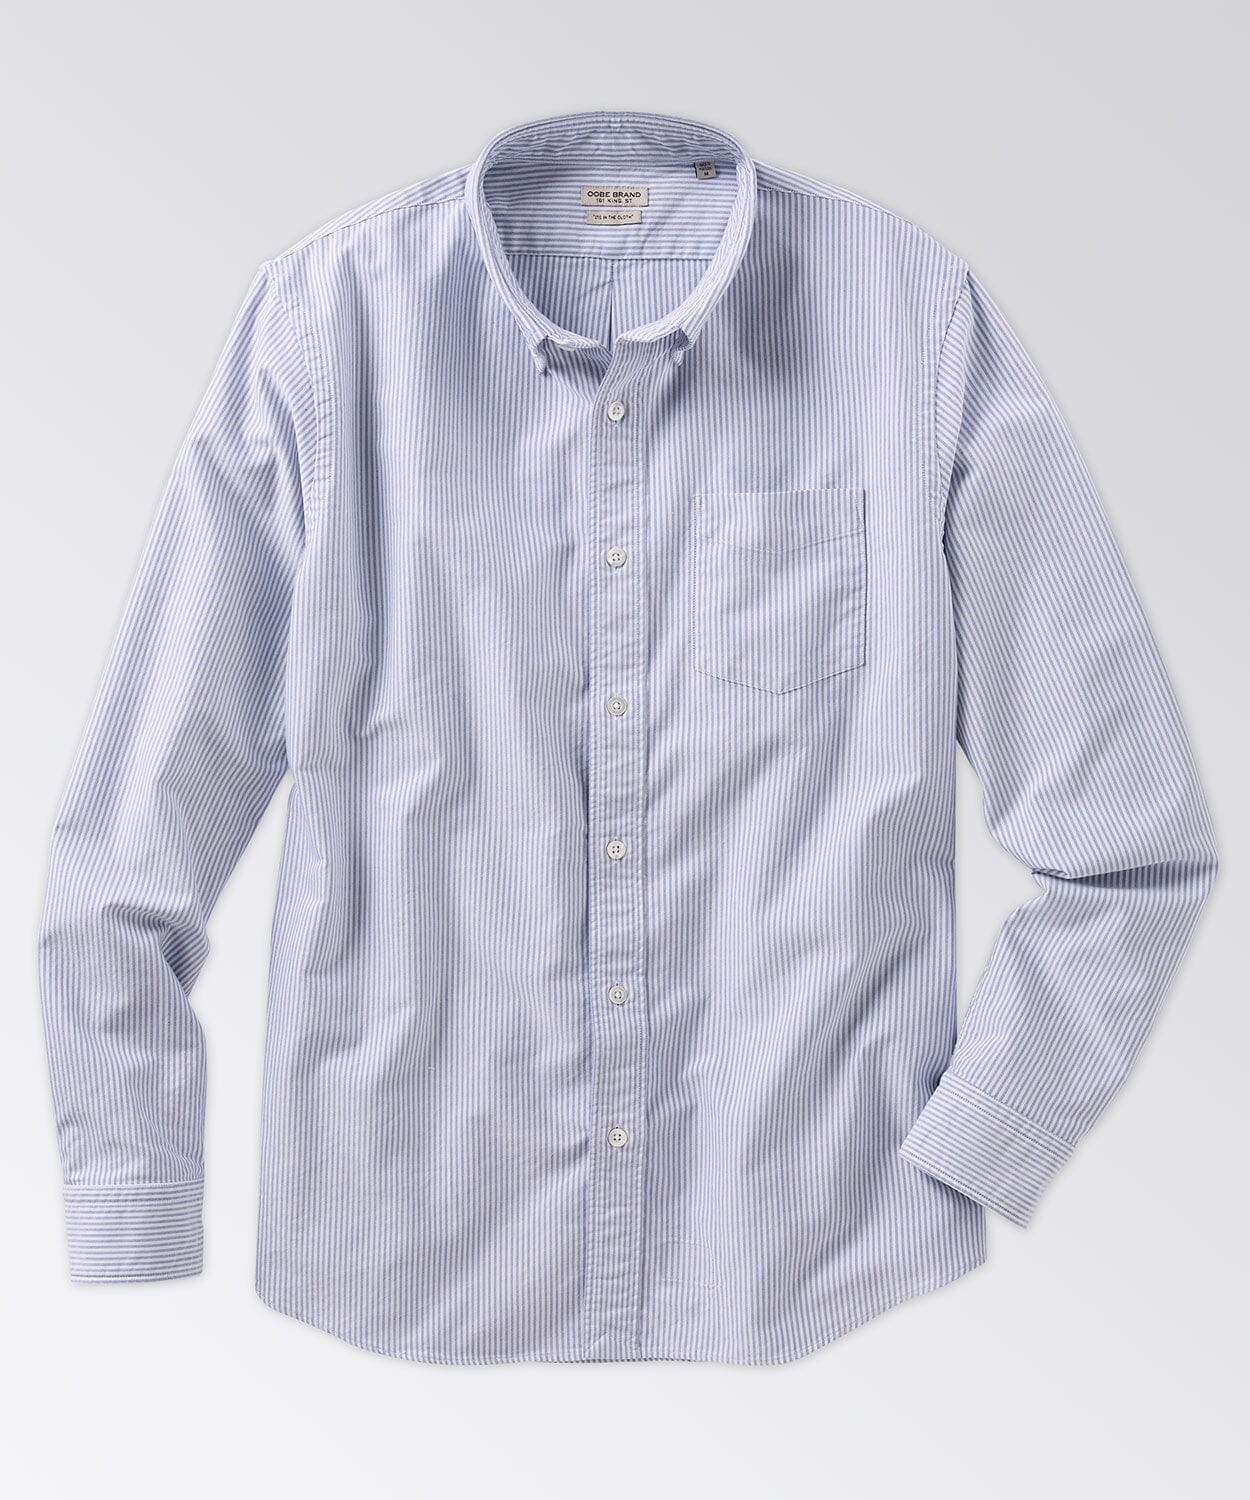 Anson Shirt Button Downs OOBE BRAND Blue White Stripe S 